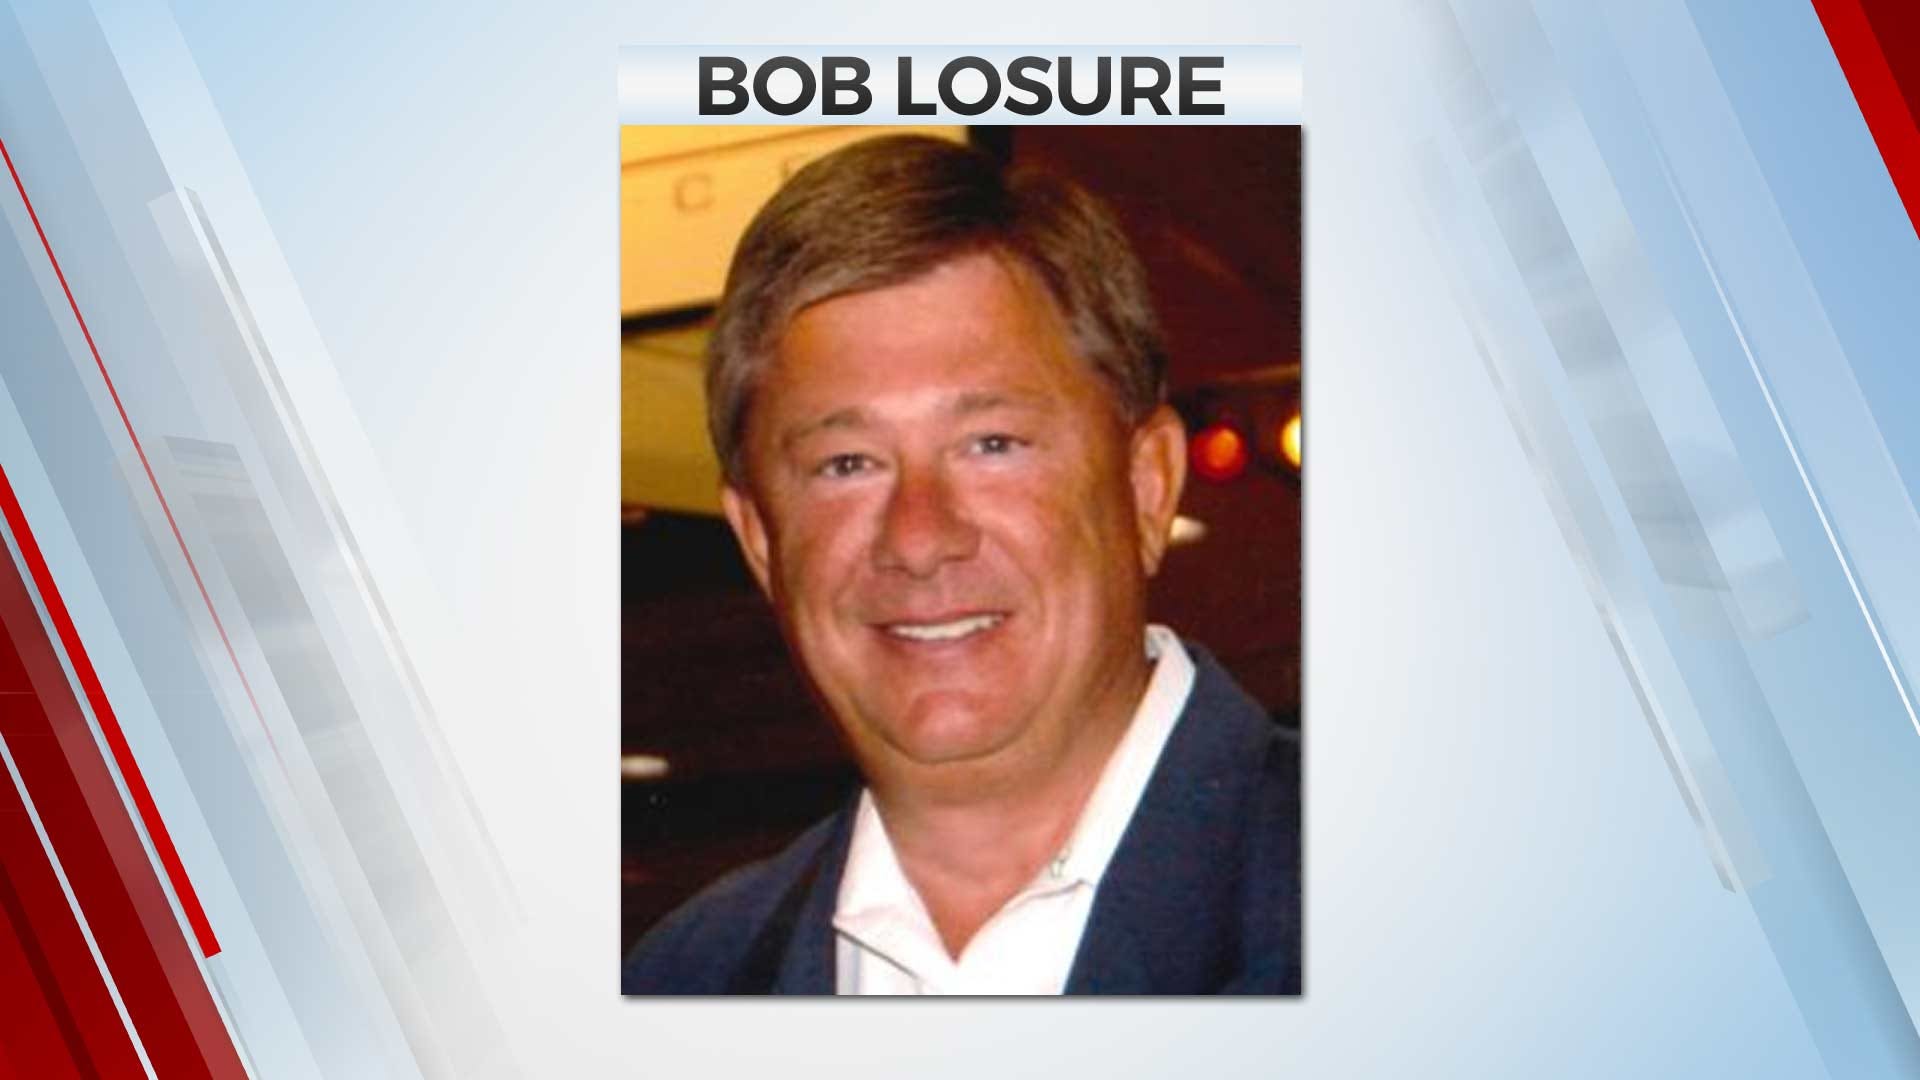 From The KOTV Vault: Remembering Bob Losure